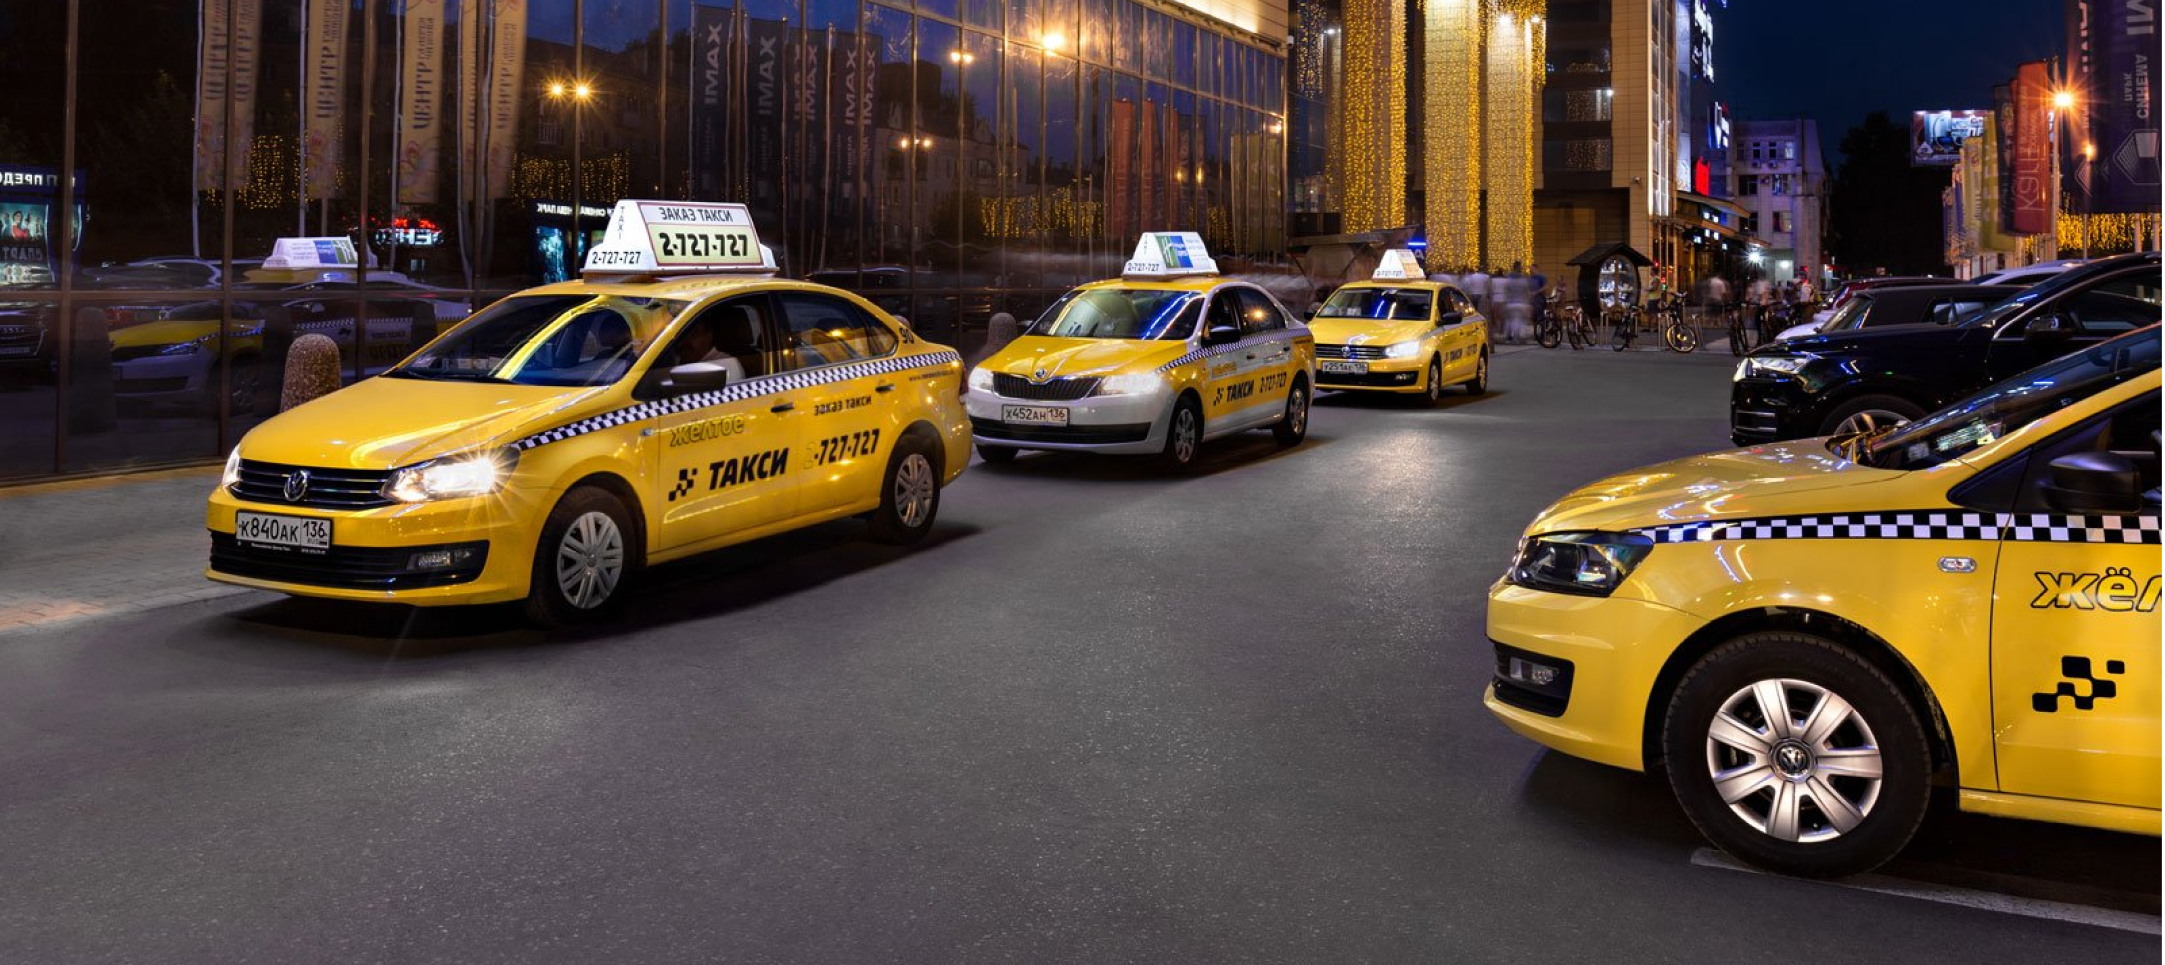 Где снималась такси. Такси. Желтое такси. Такси Москва. Такси фото.